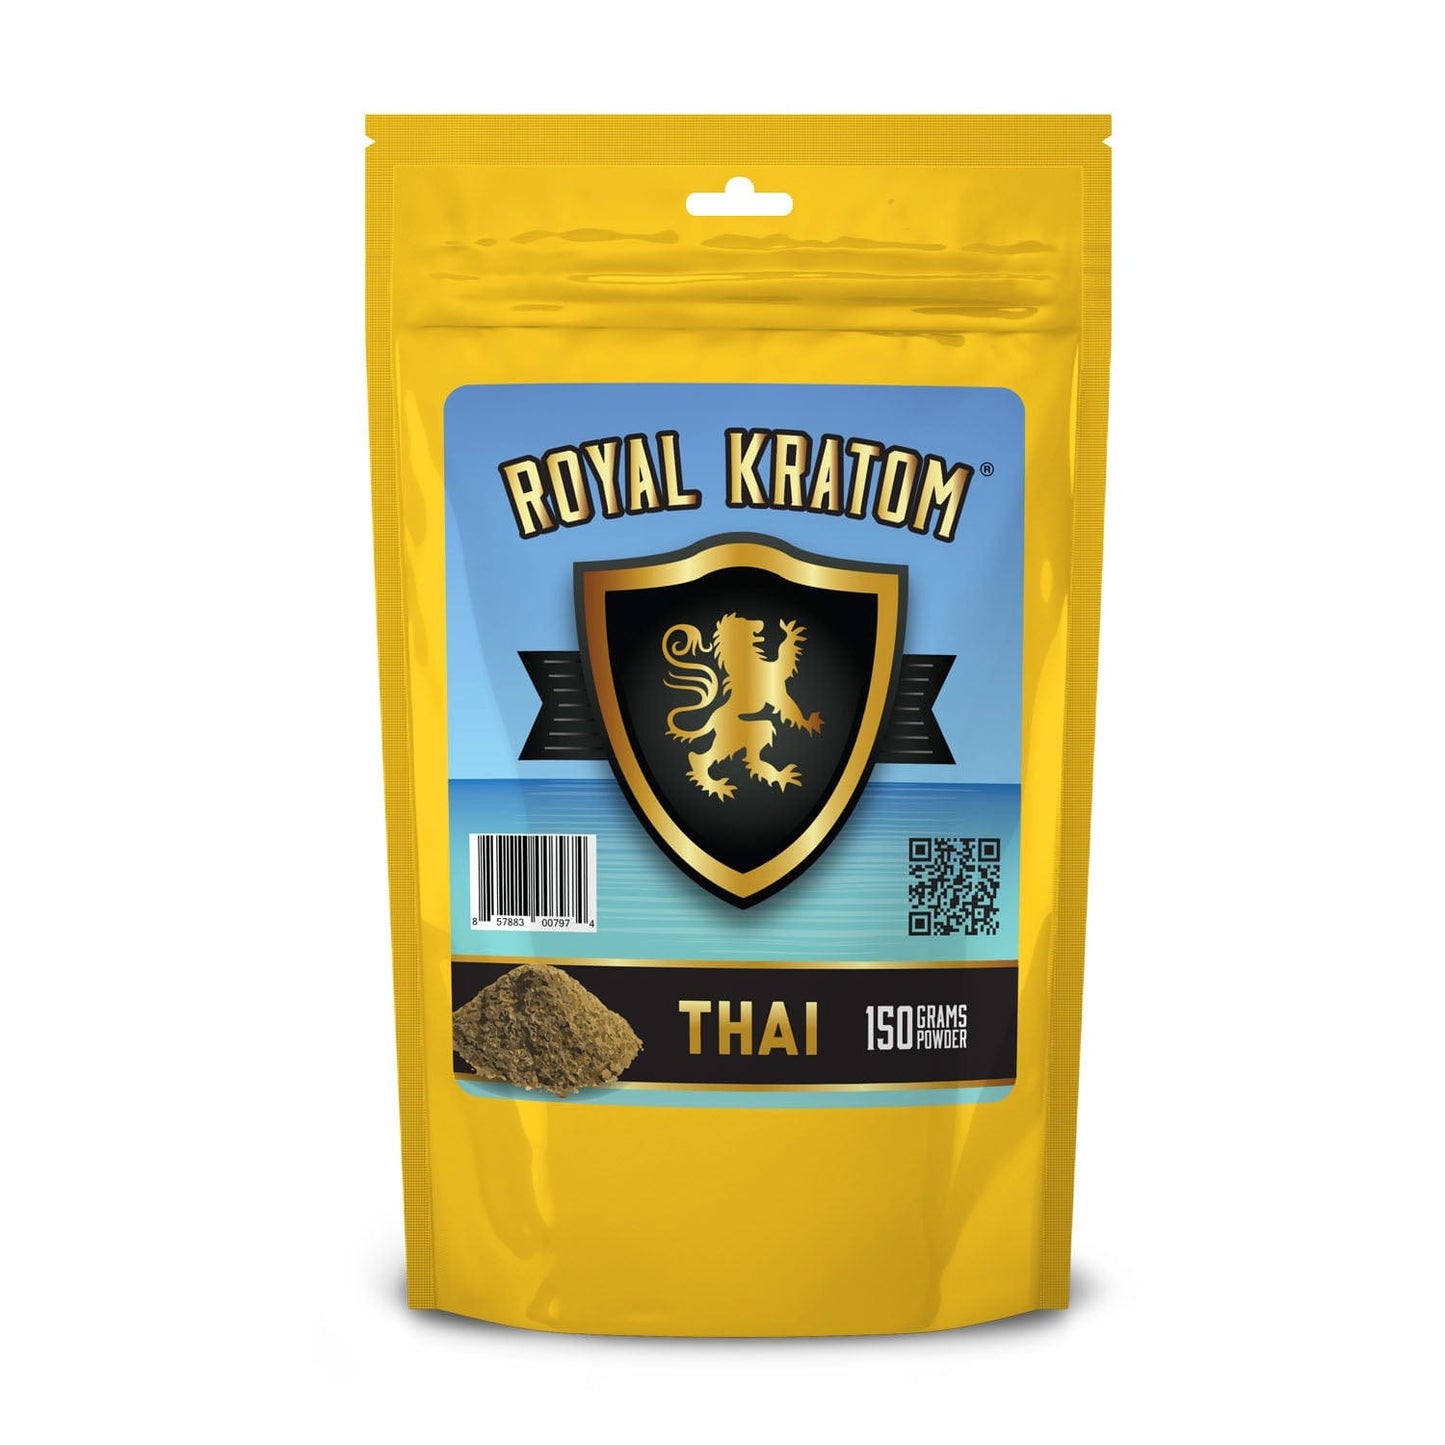 Royal Kratom Thai Kratom Powder 150 Grams front of package